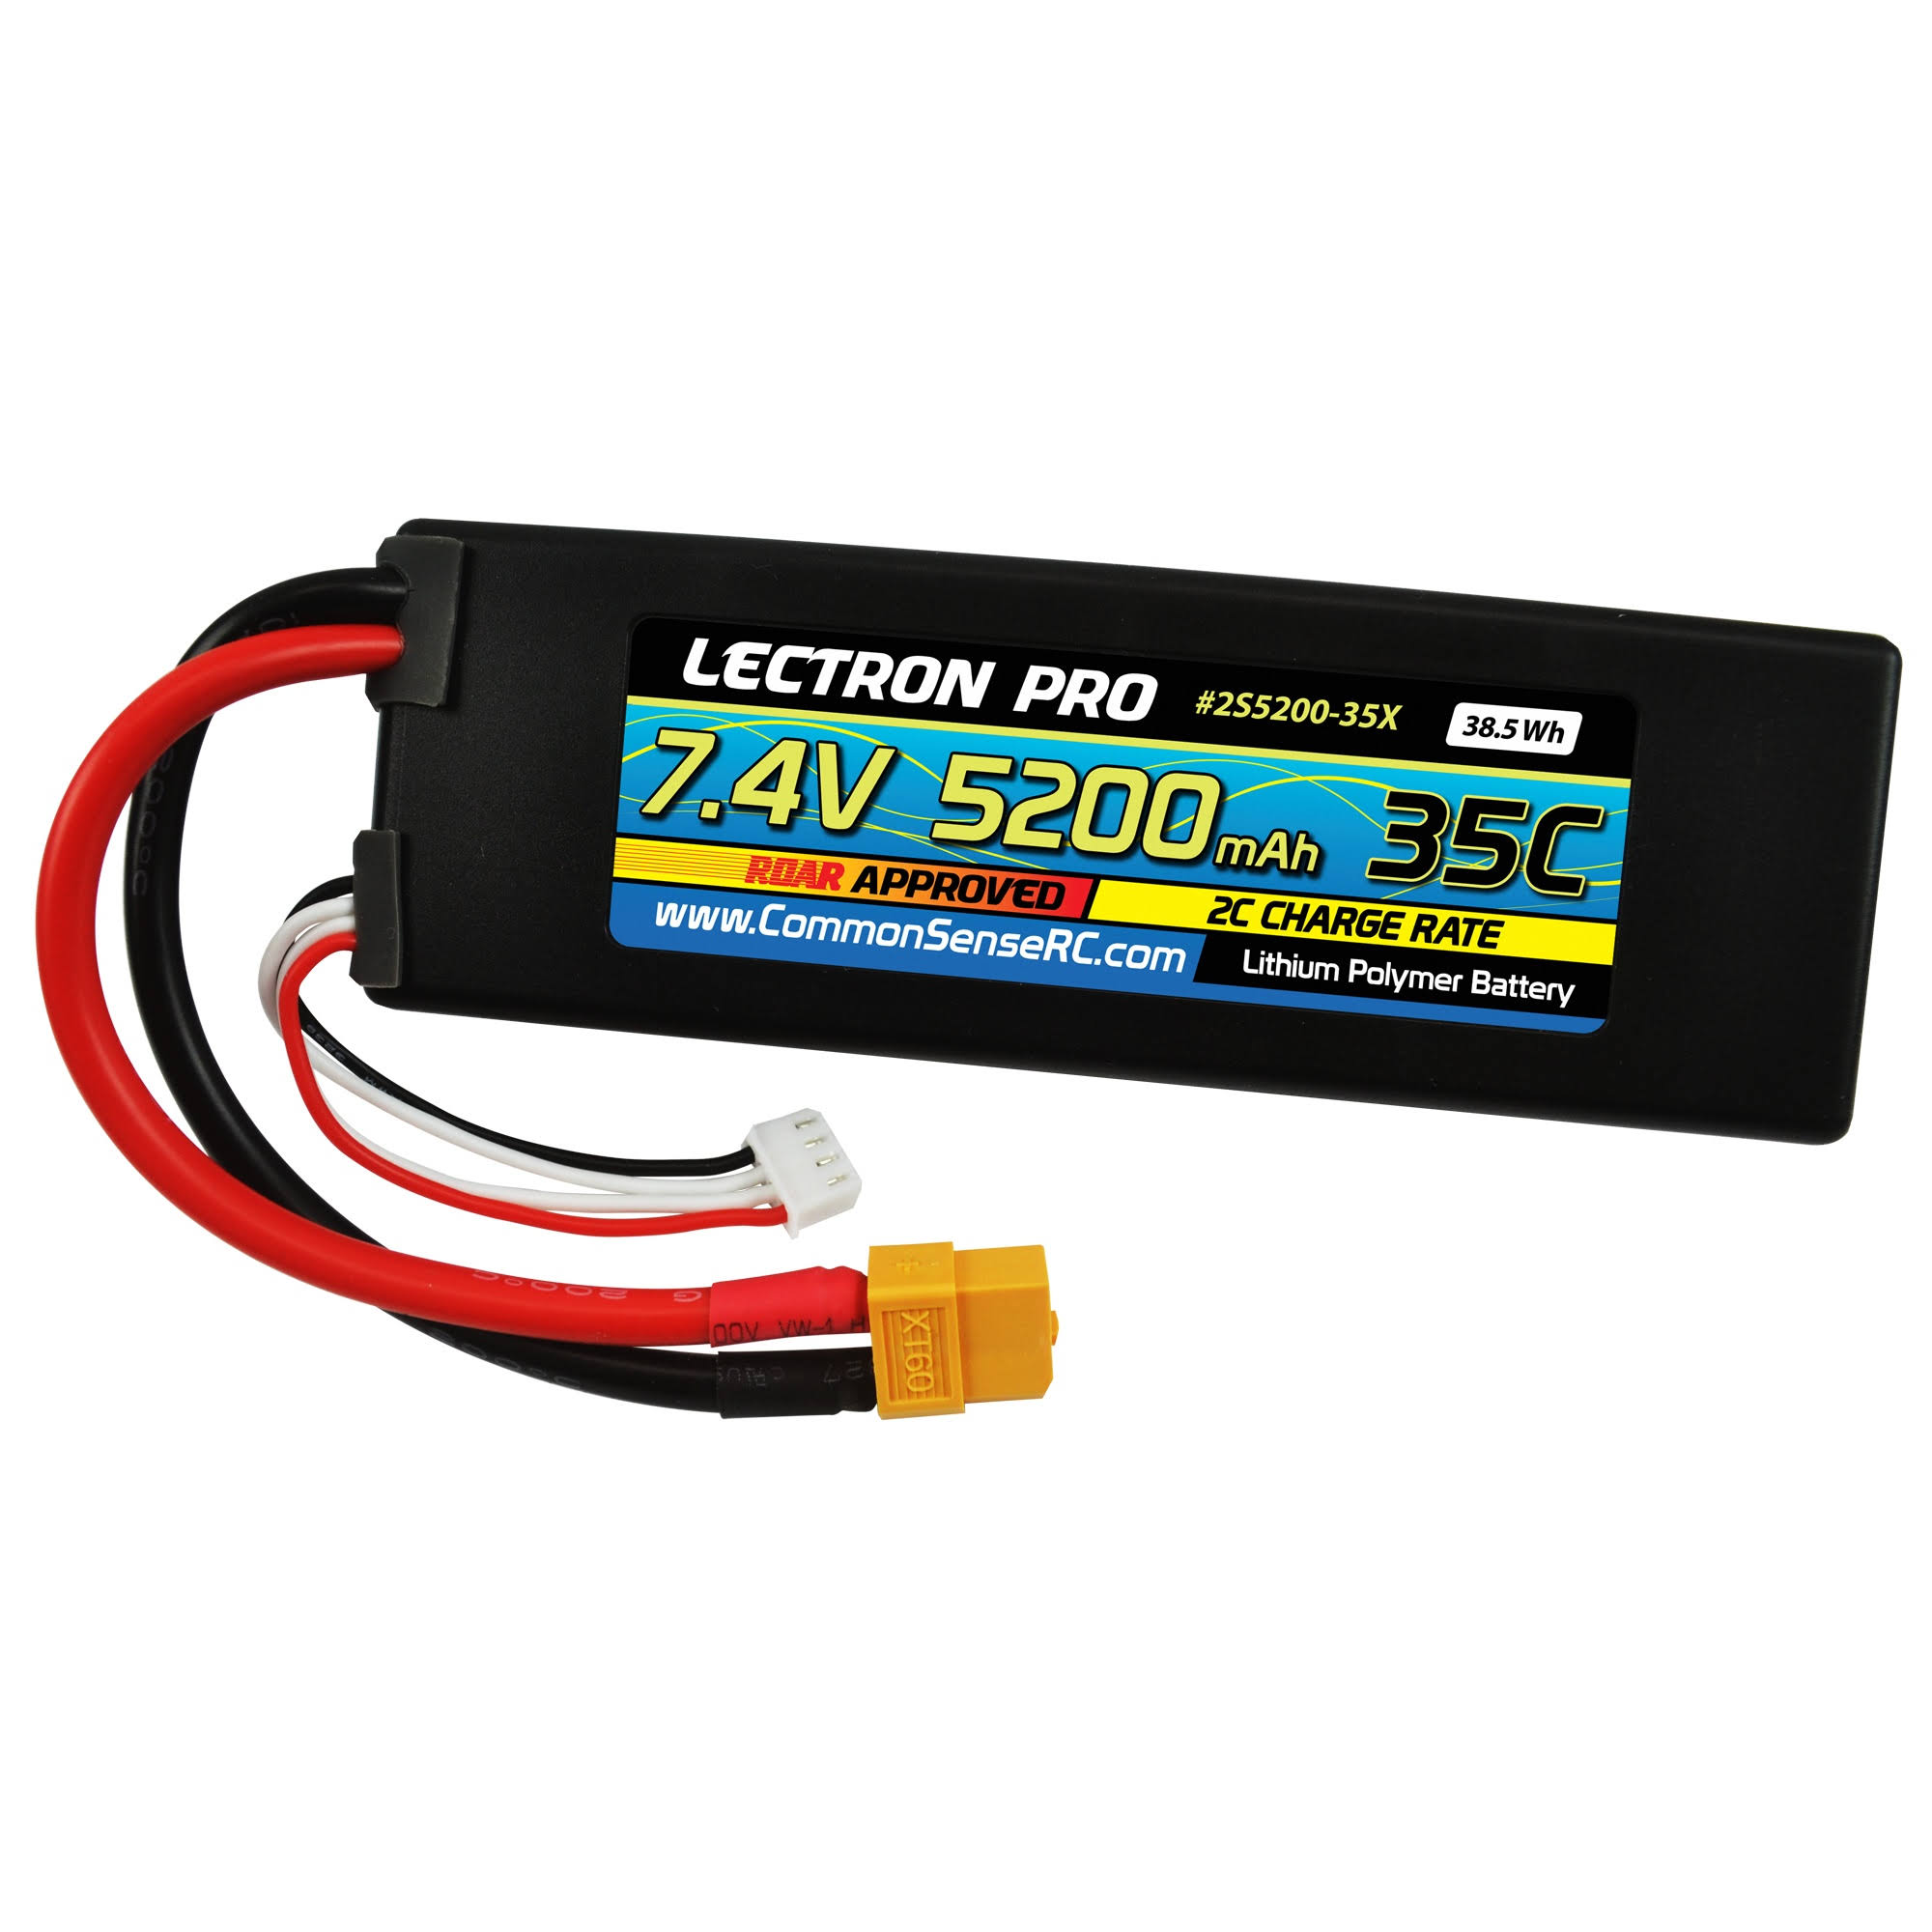 Lectron Pro 7.4V 5200mAh 35C Lipo Battery with XT60 Connector + CSRC